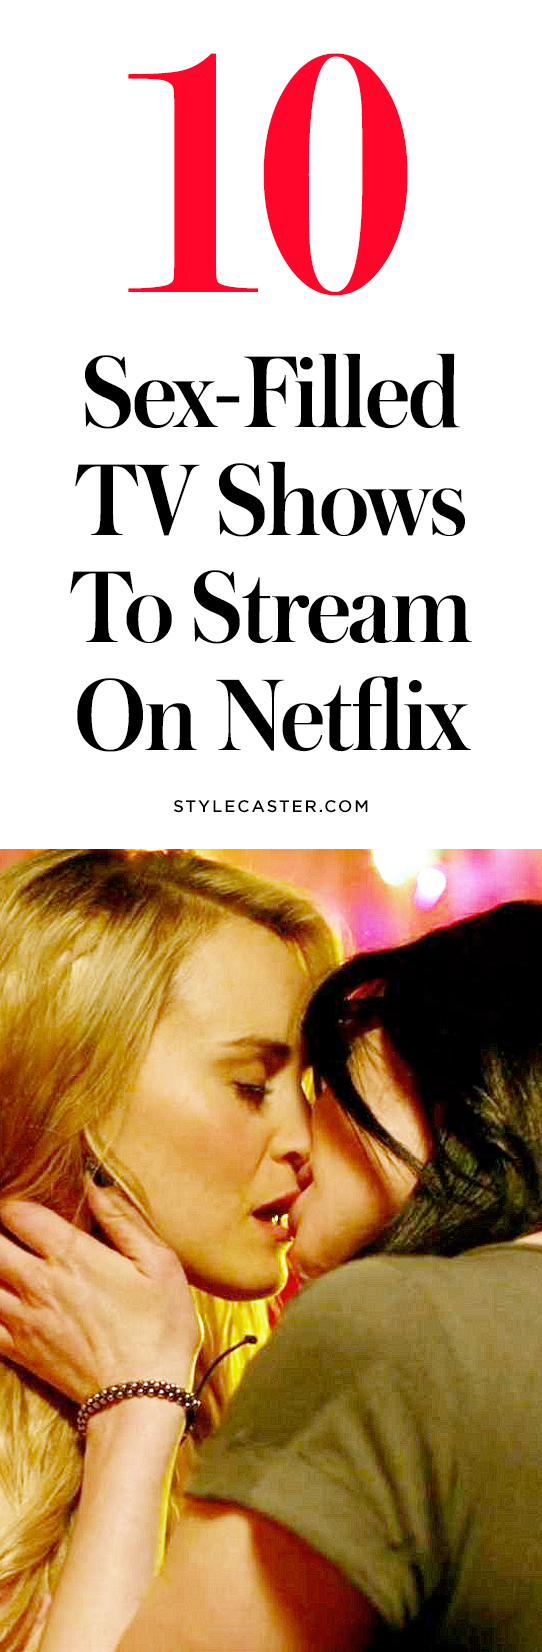 Jessica R. reccomend Streaming sex films